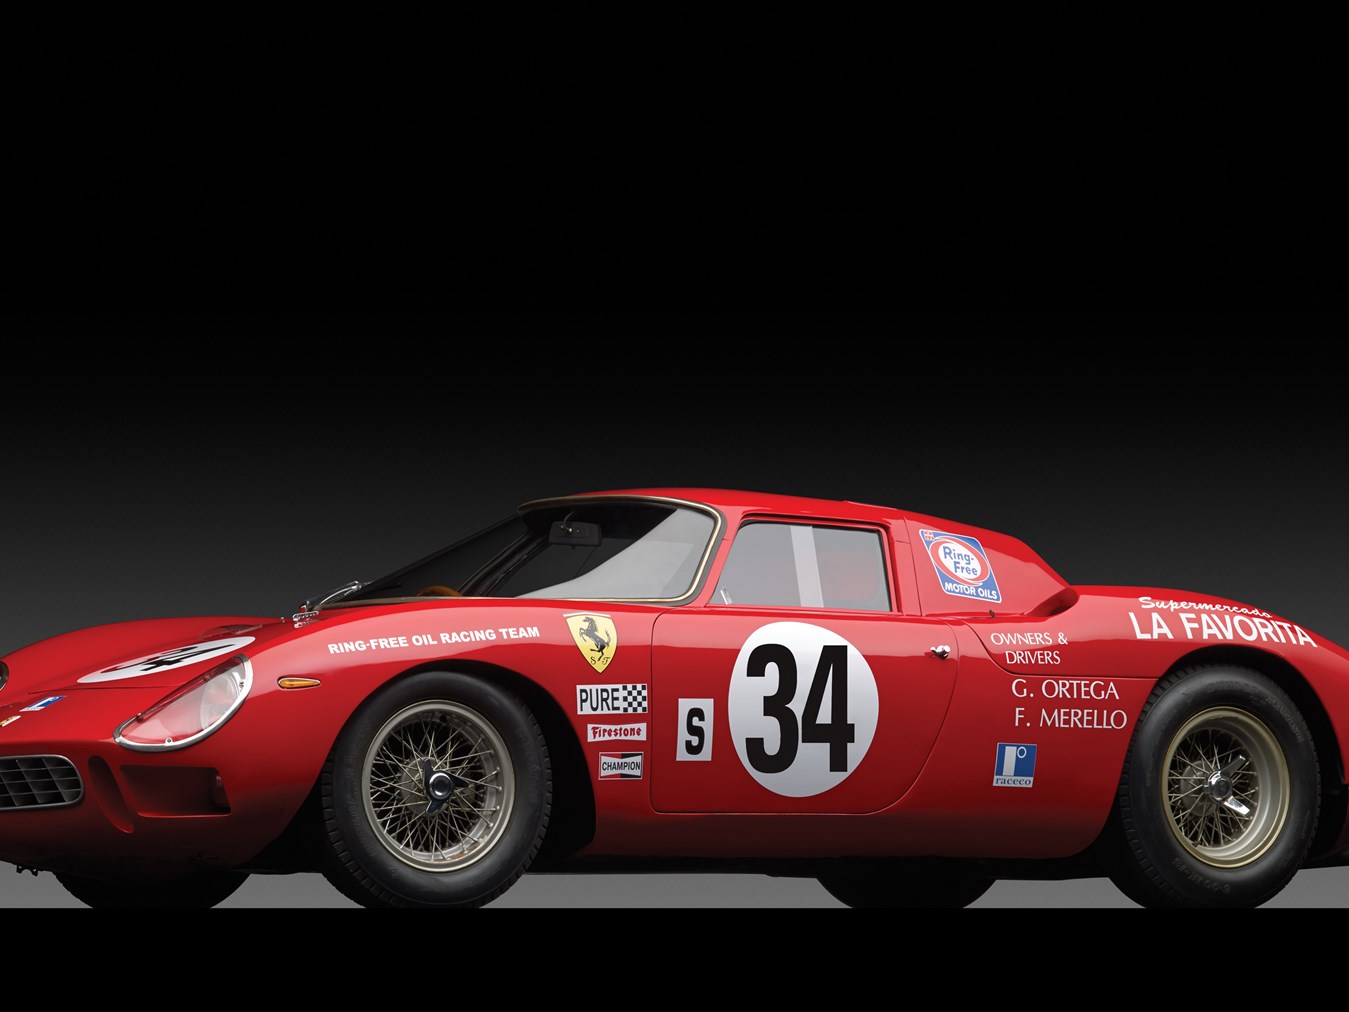 1964 Ferrari 250 LM sold